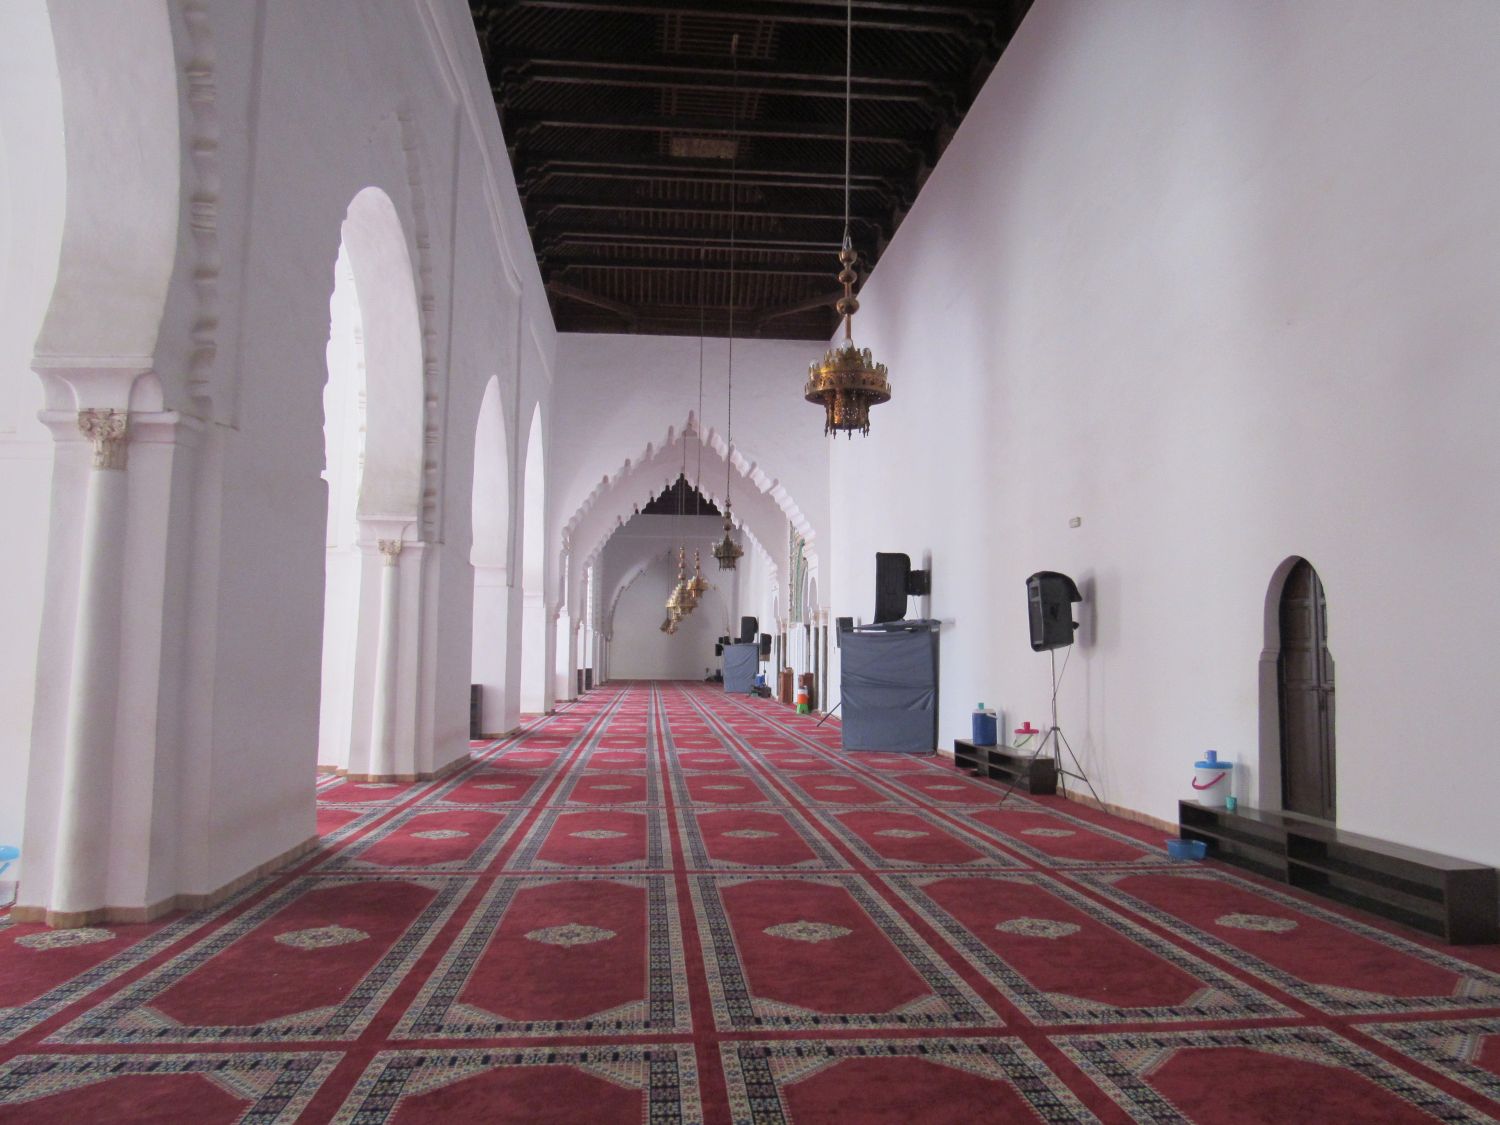 Interior view of the prayer hall.